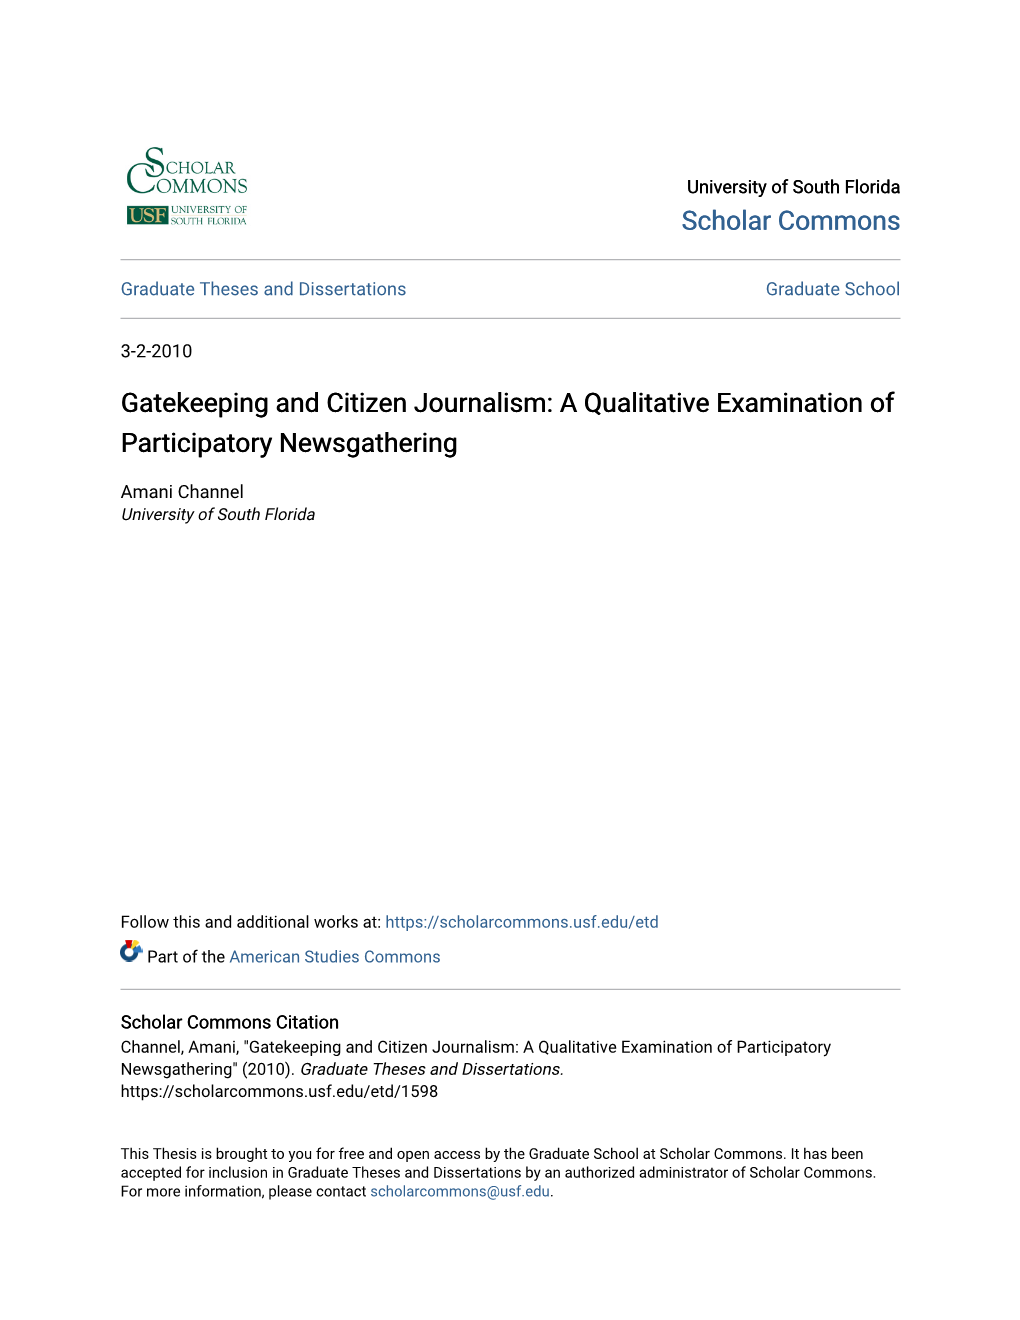 Gatekeeping and Citizen Journalism: a Qualitative Examination of Participatory Newsgathering